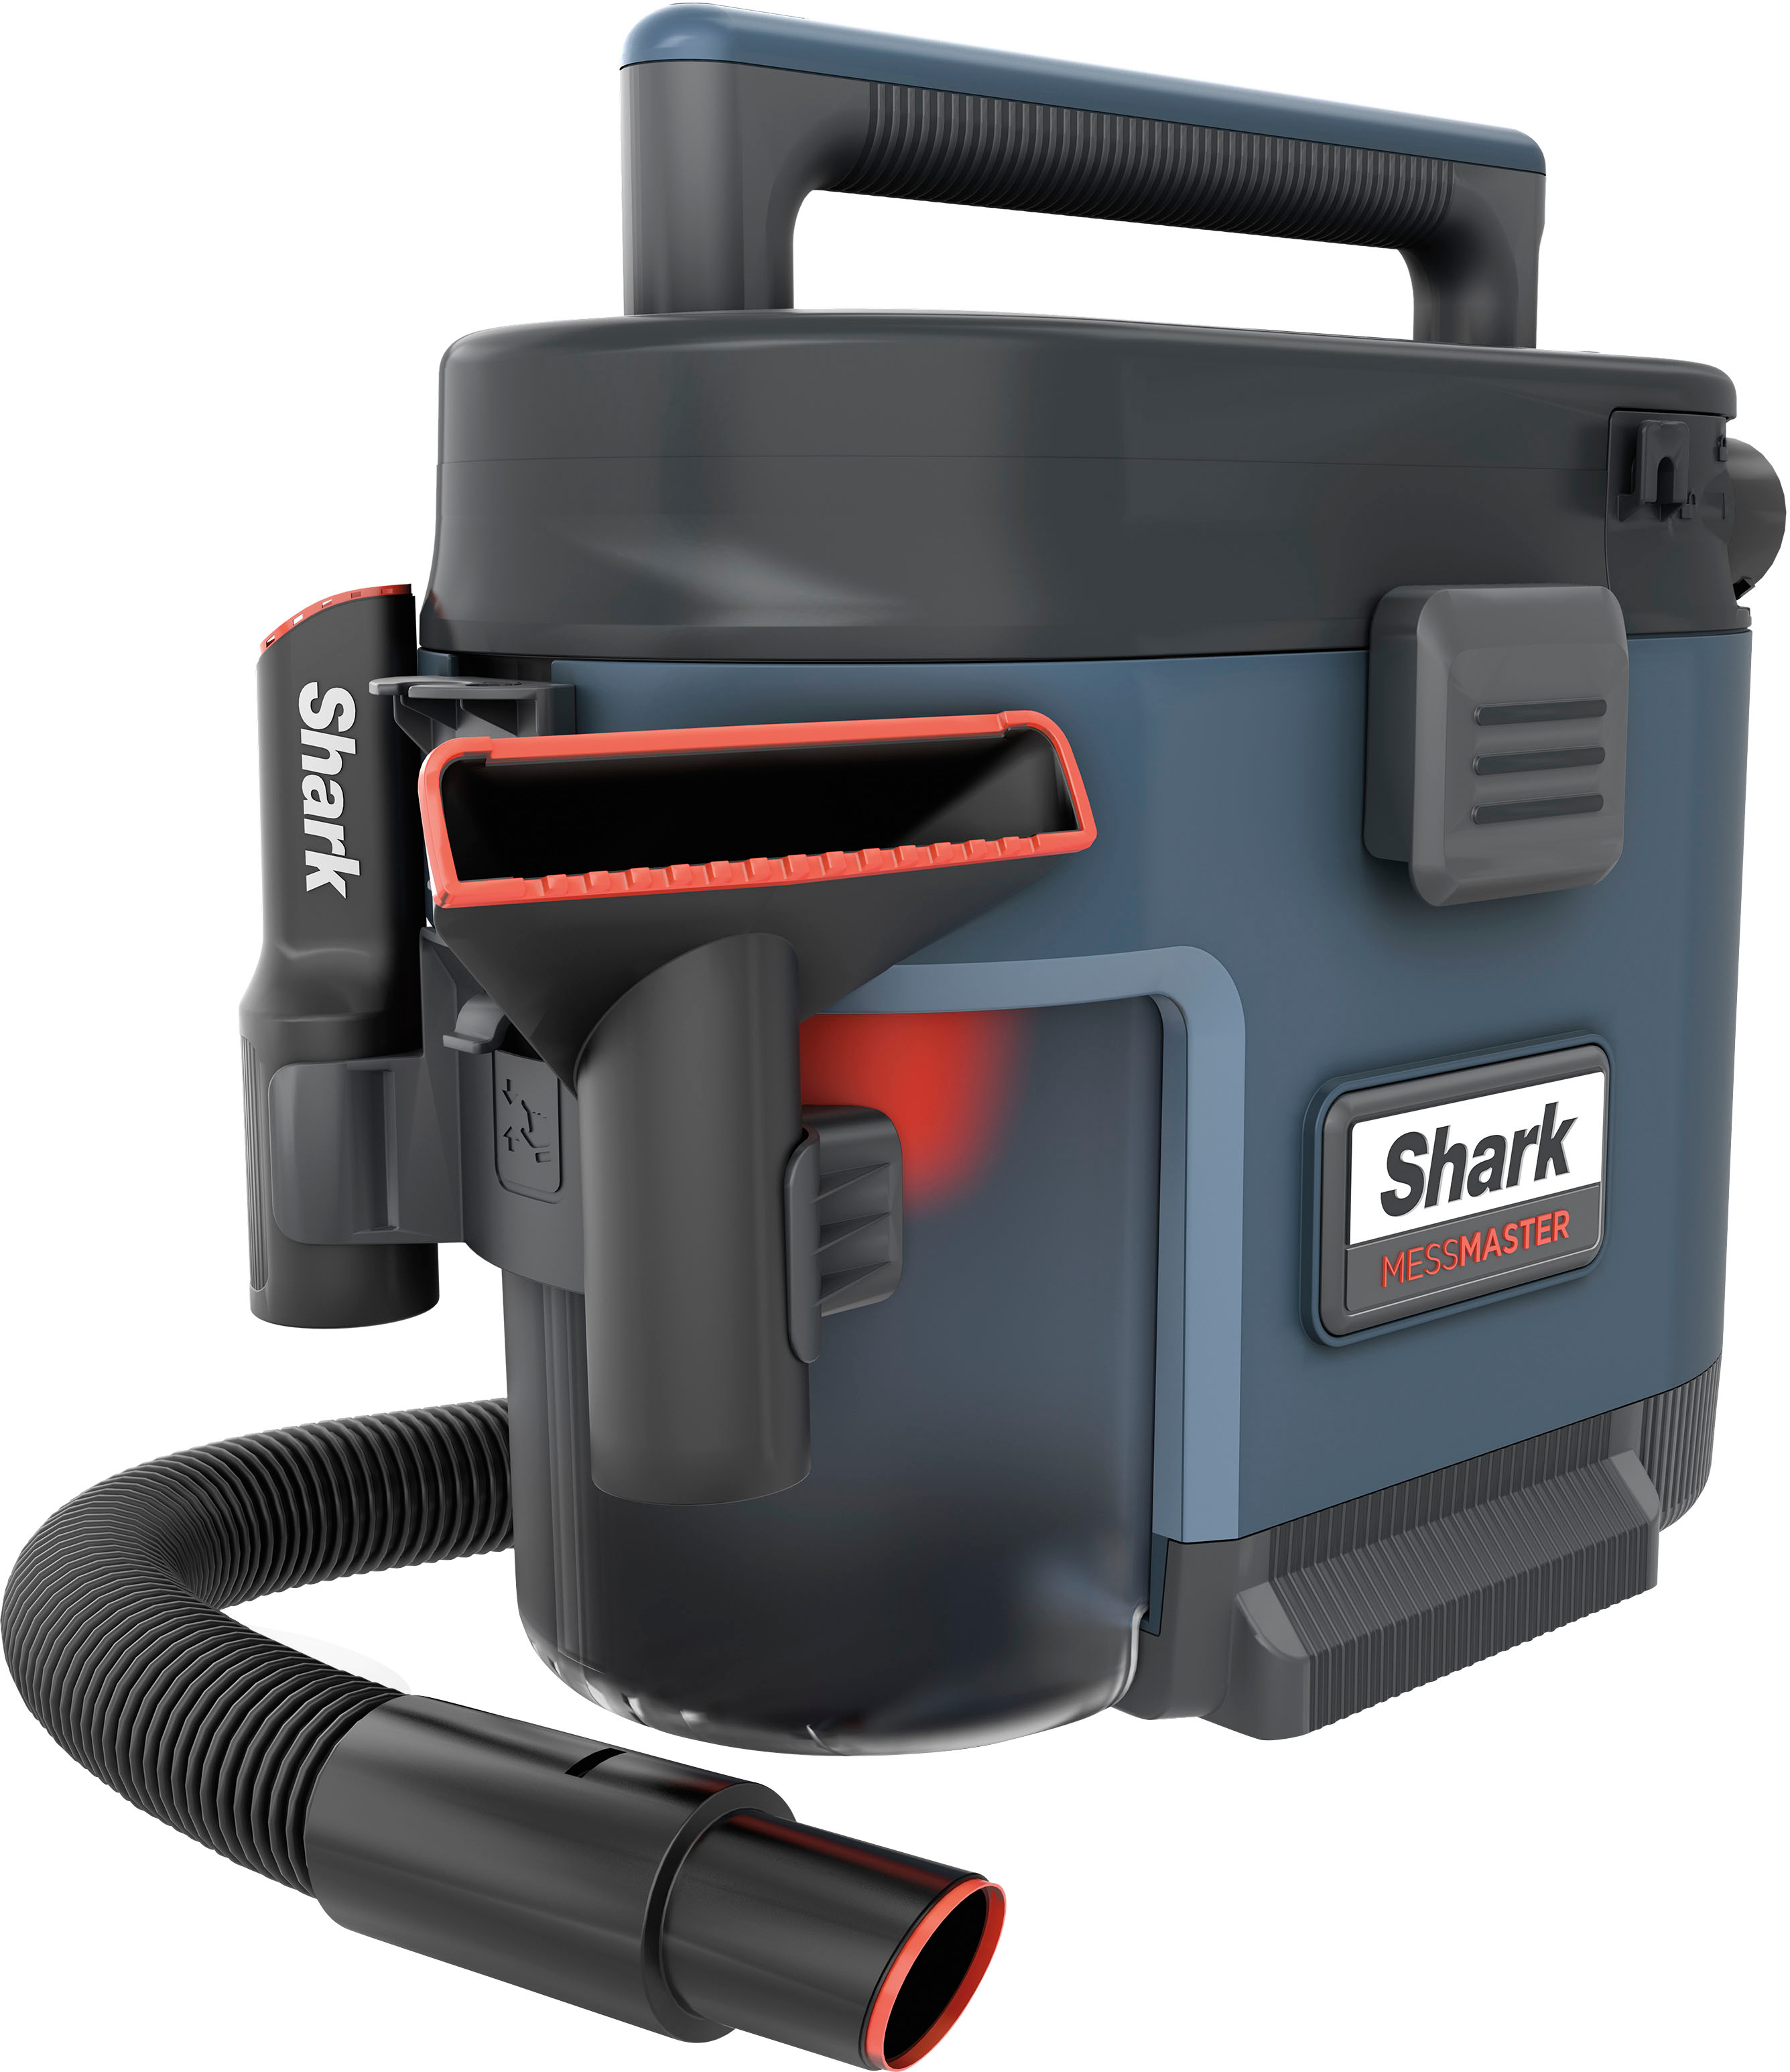 Best Buy: Shark - MessMaster Portable Wet/Dry Vacuum, Small Shop Vac, 1 Gallon Capacity with Bonus Carpet Tool - Blue $80 F/S